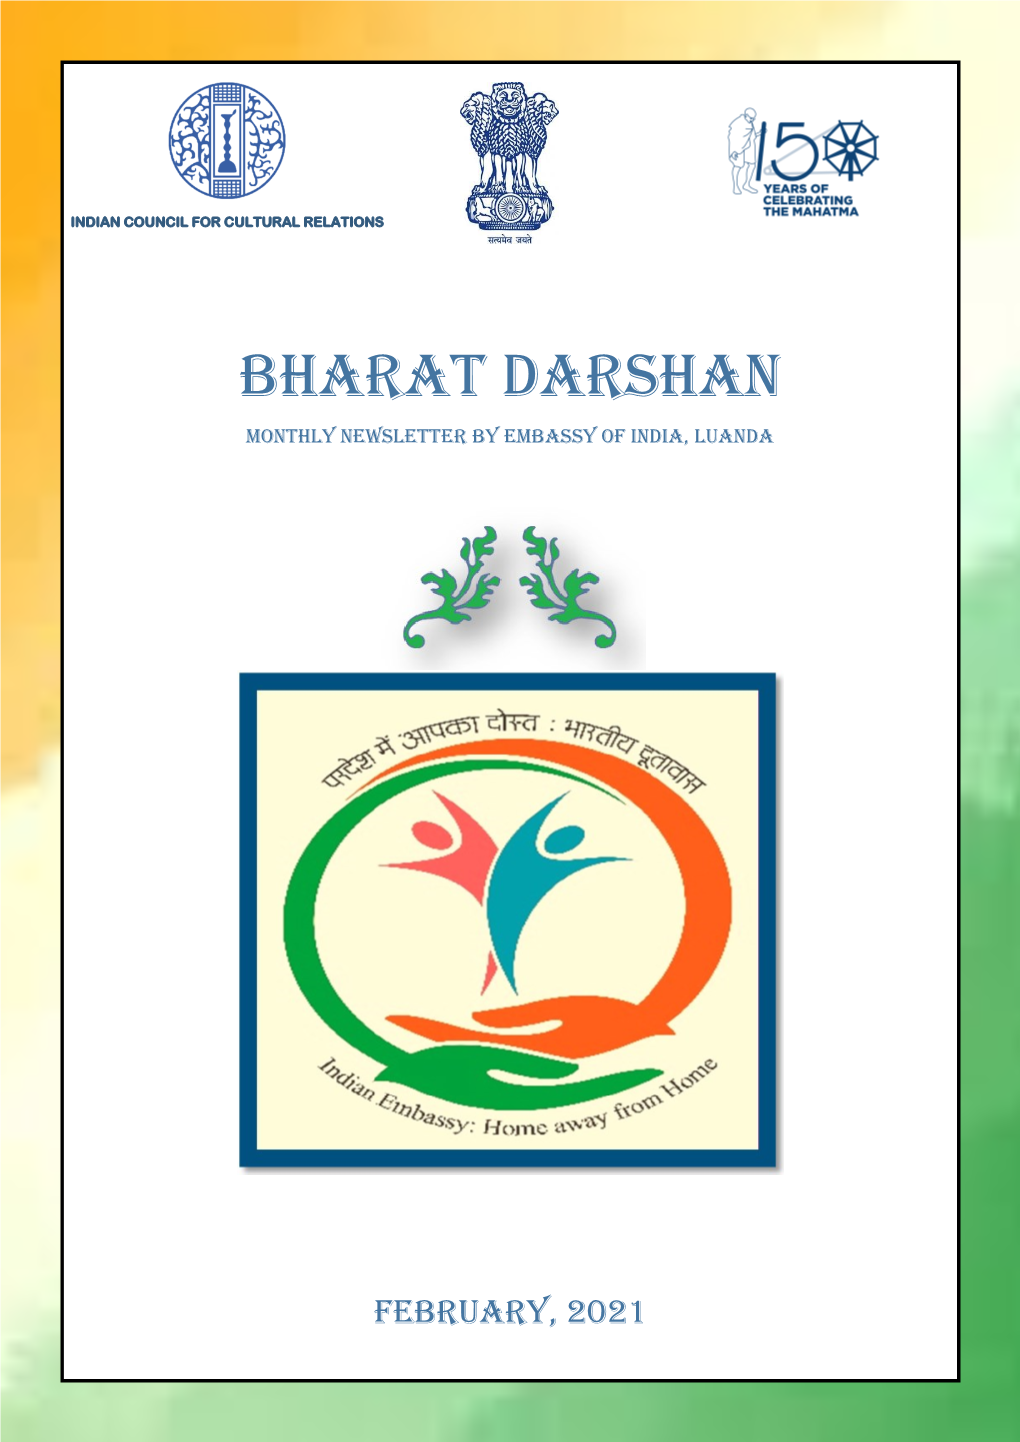 BHARAT DARSHAN Monthly Newsletter by Embassy of India, Luanda